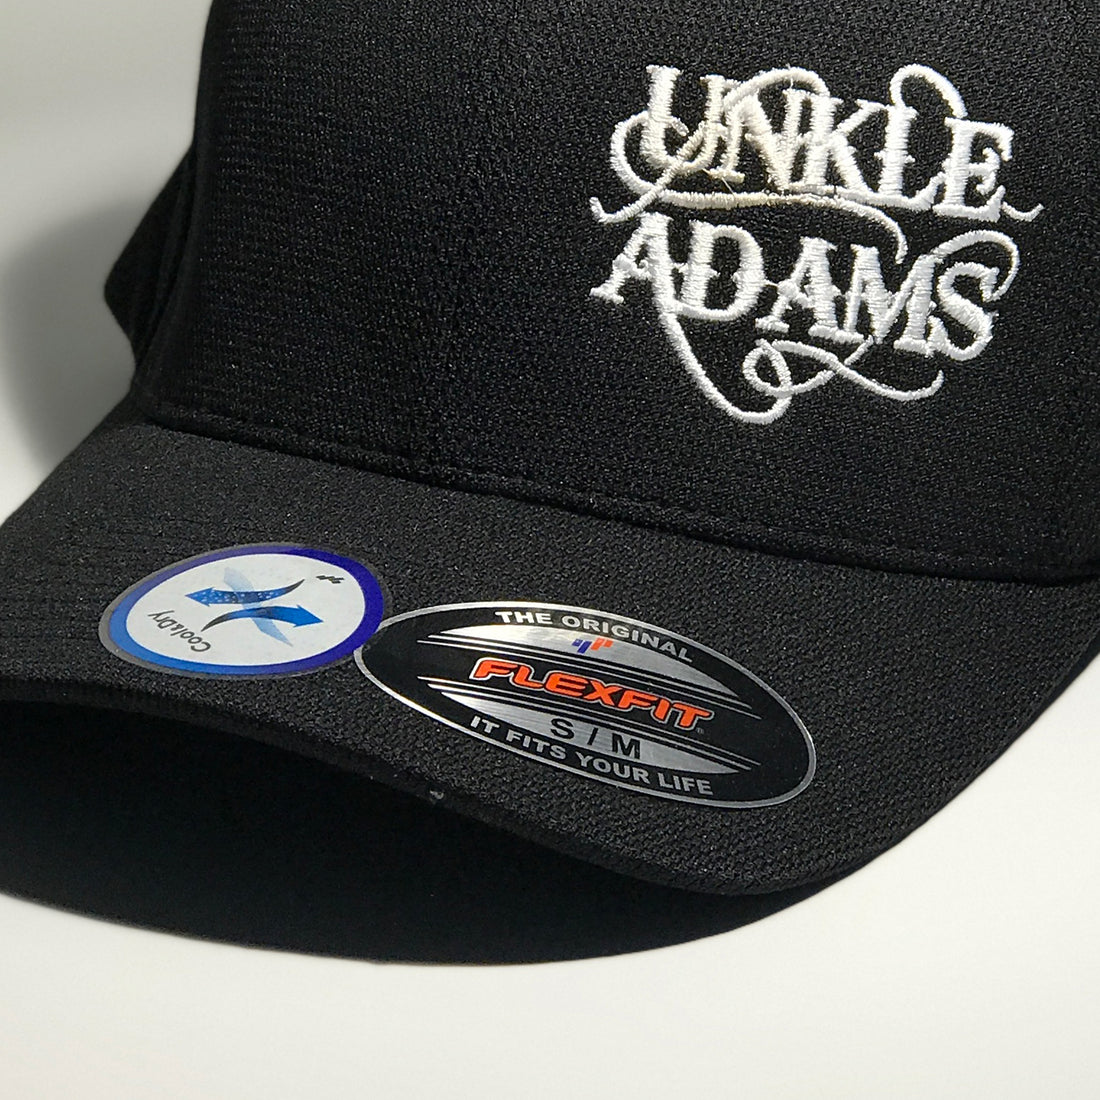 Unkle Adams - Logo - Hat - Initialed